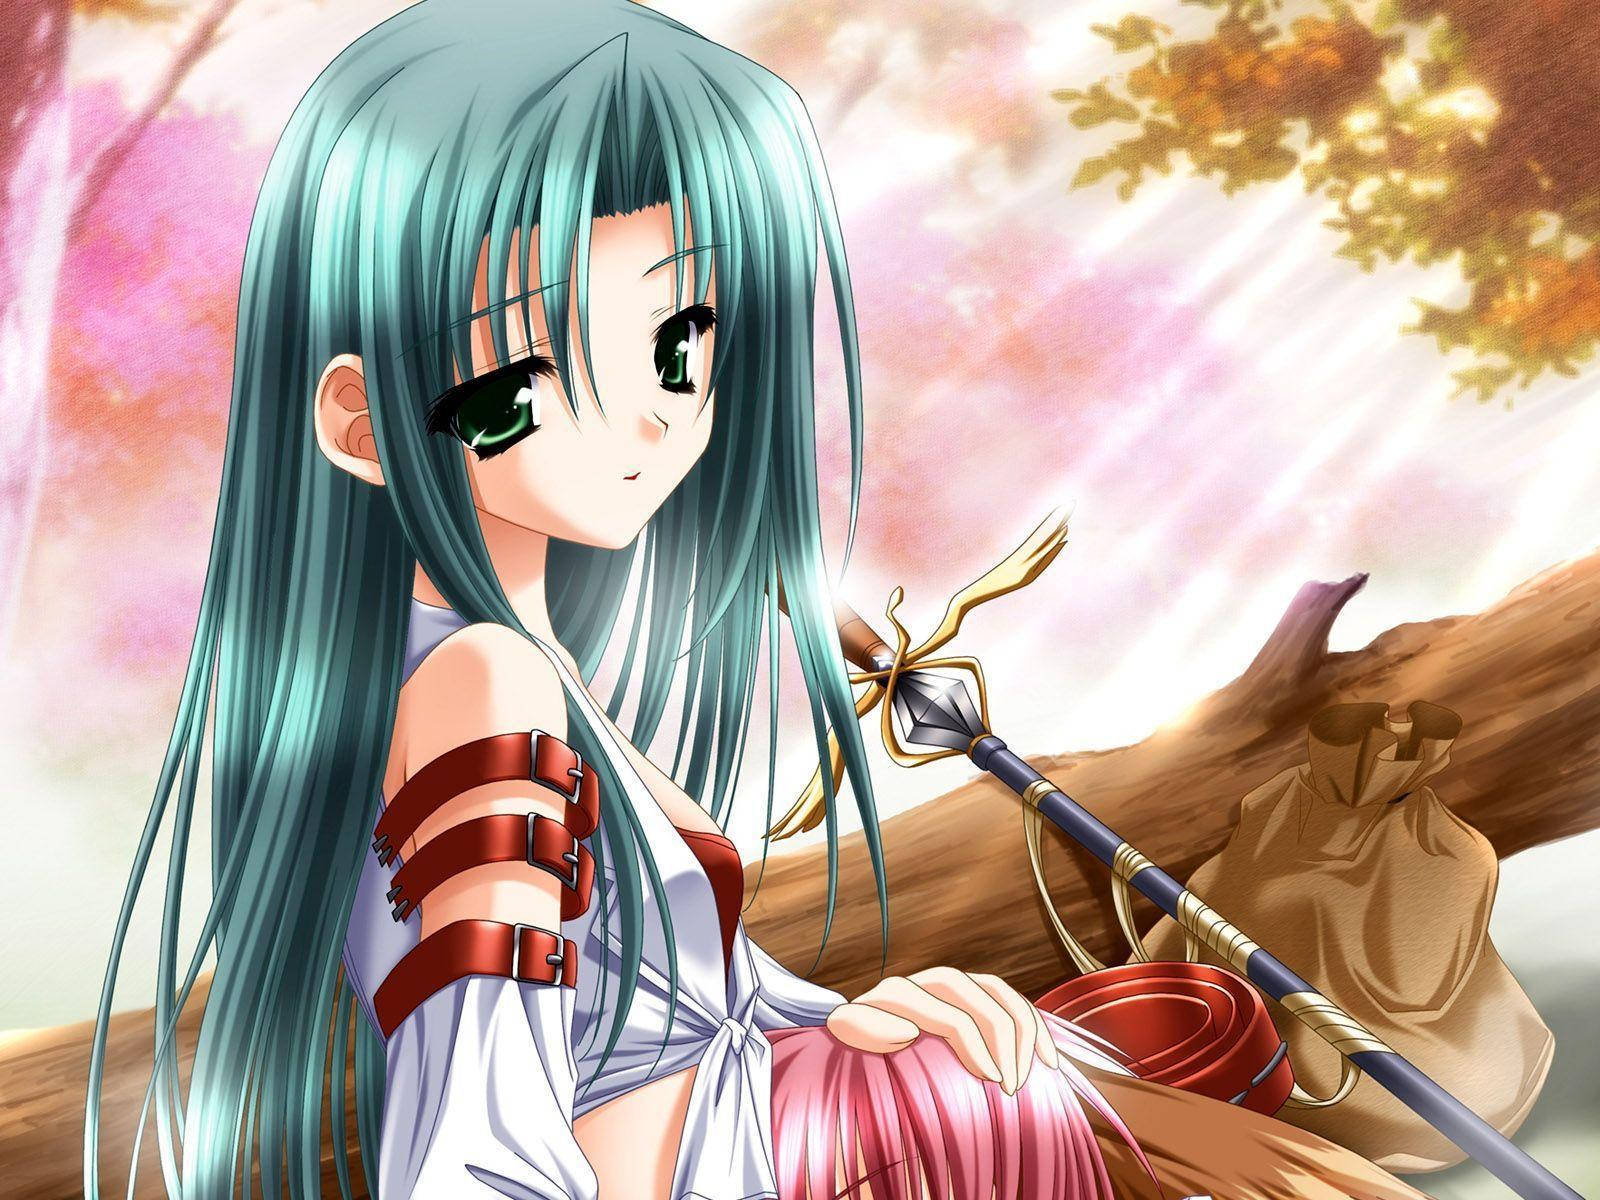 Beautiful Anime Woman With Green Hair